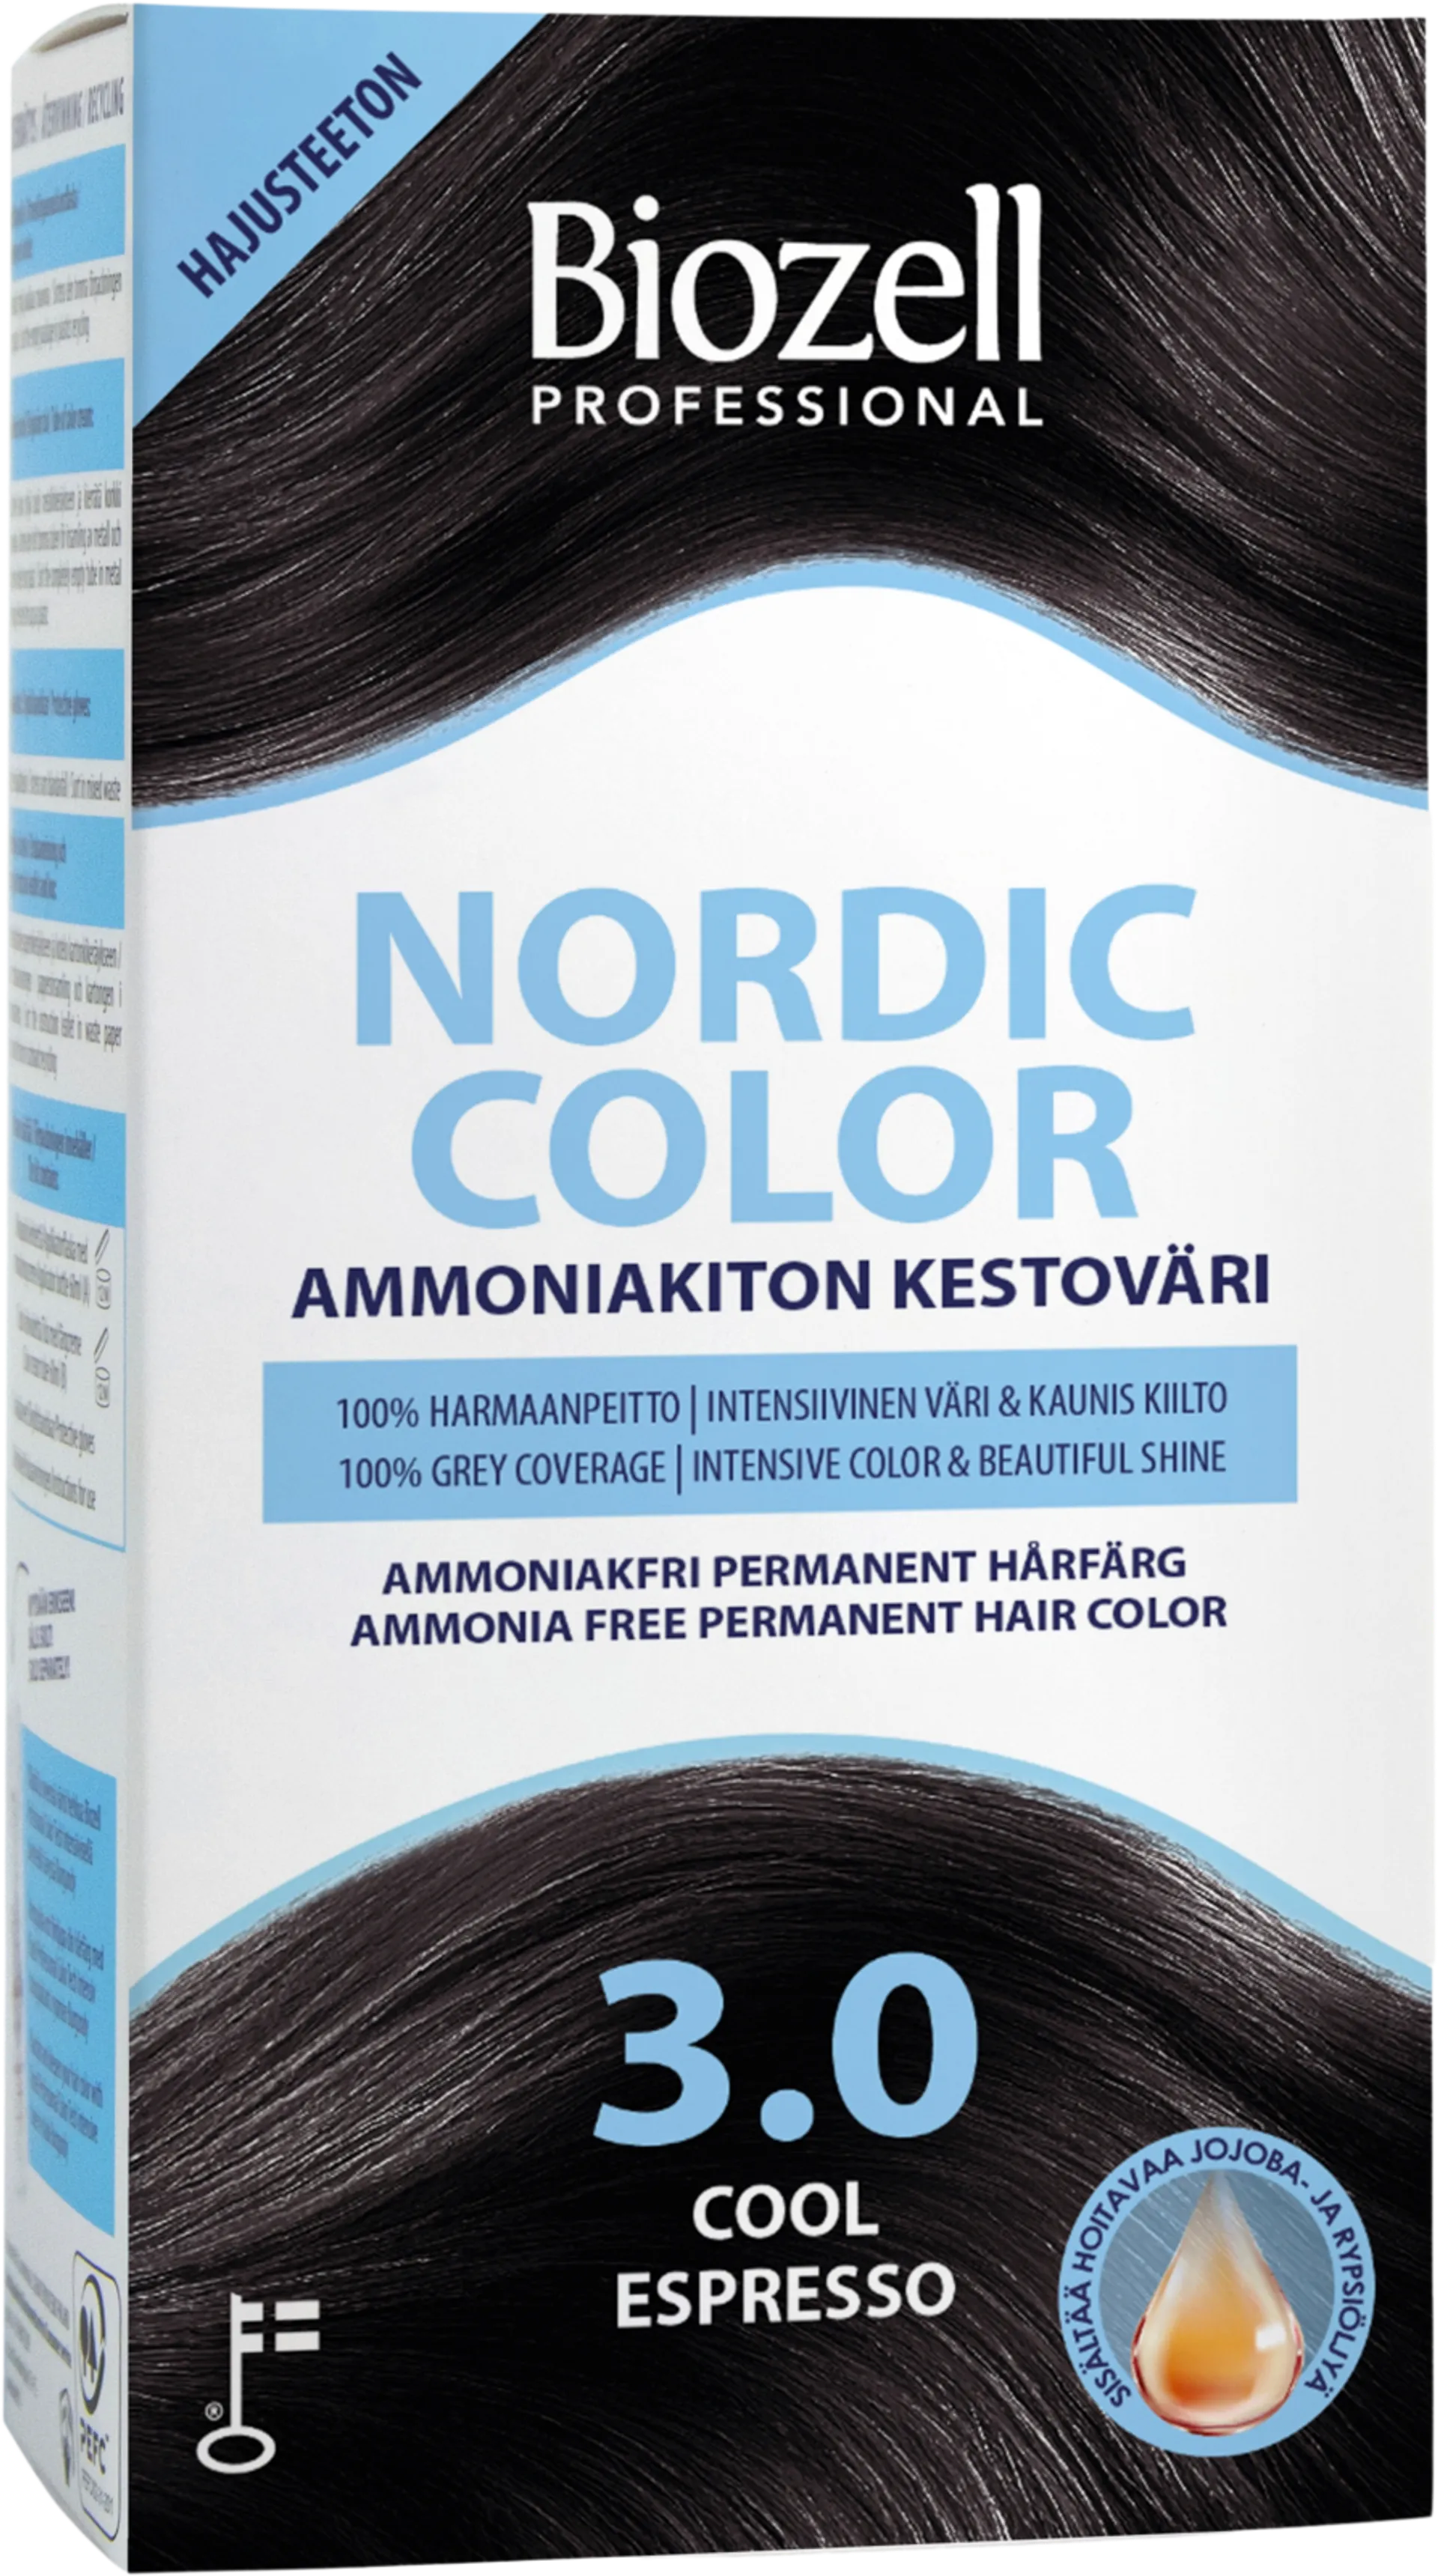 Biozell Professional Nordic Color ammoniakiton kestoväri Cool Espresso 3.0 2x60ml